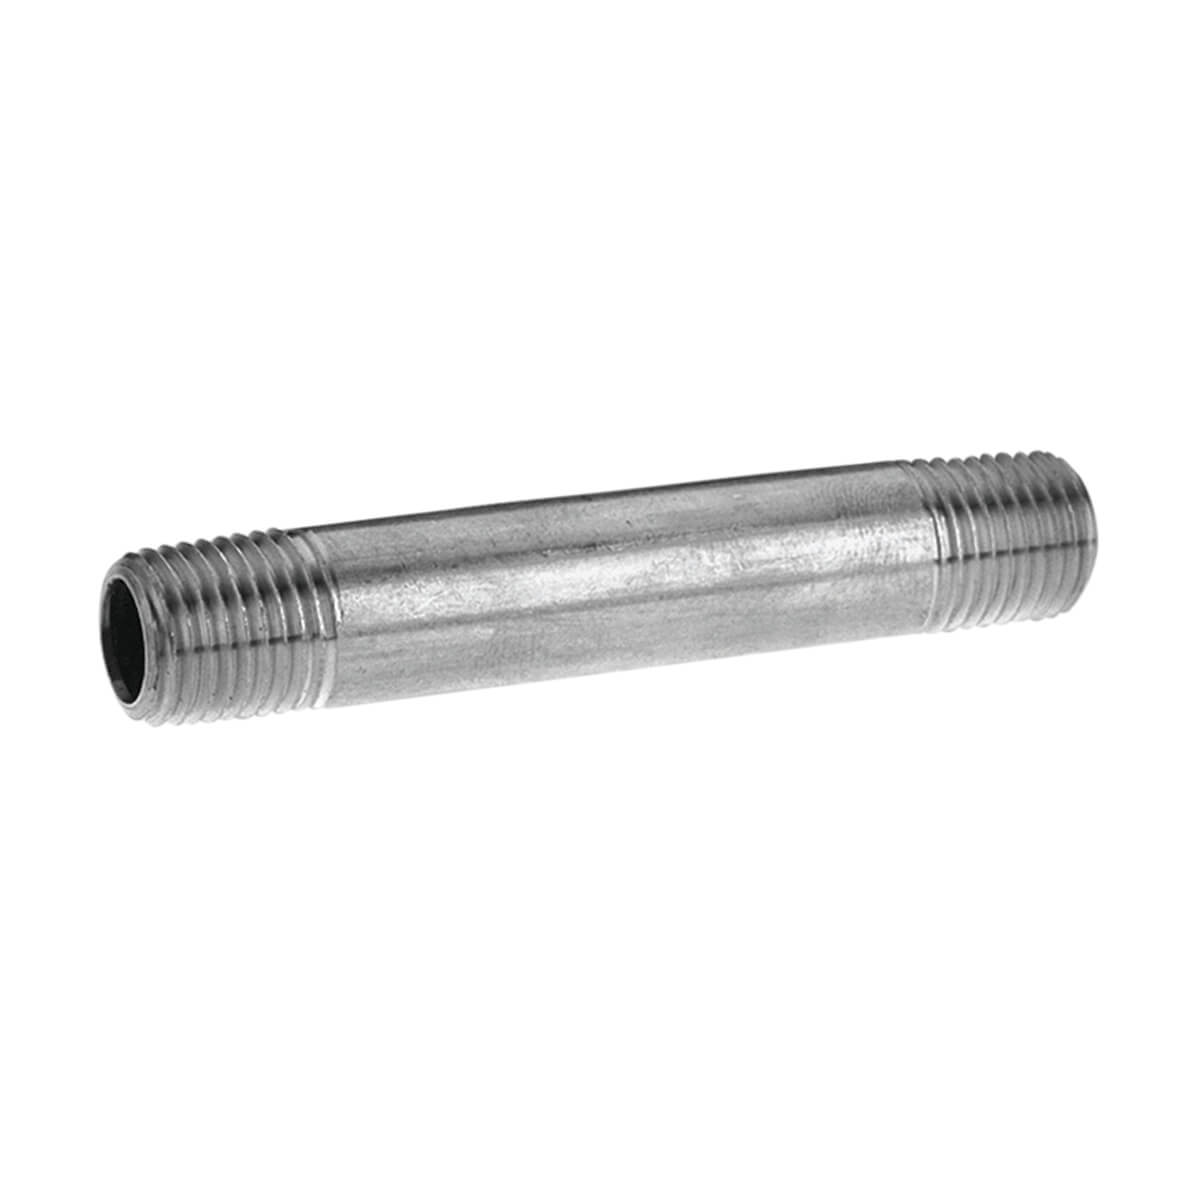 Pipe Nipple Galvanized Steel - 1/4-in x 2-in